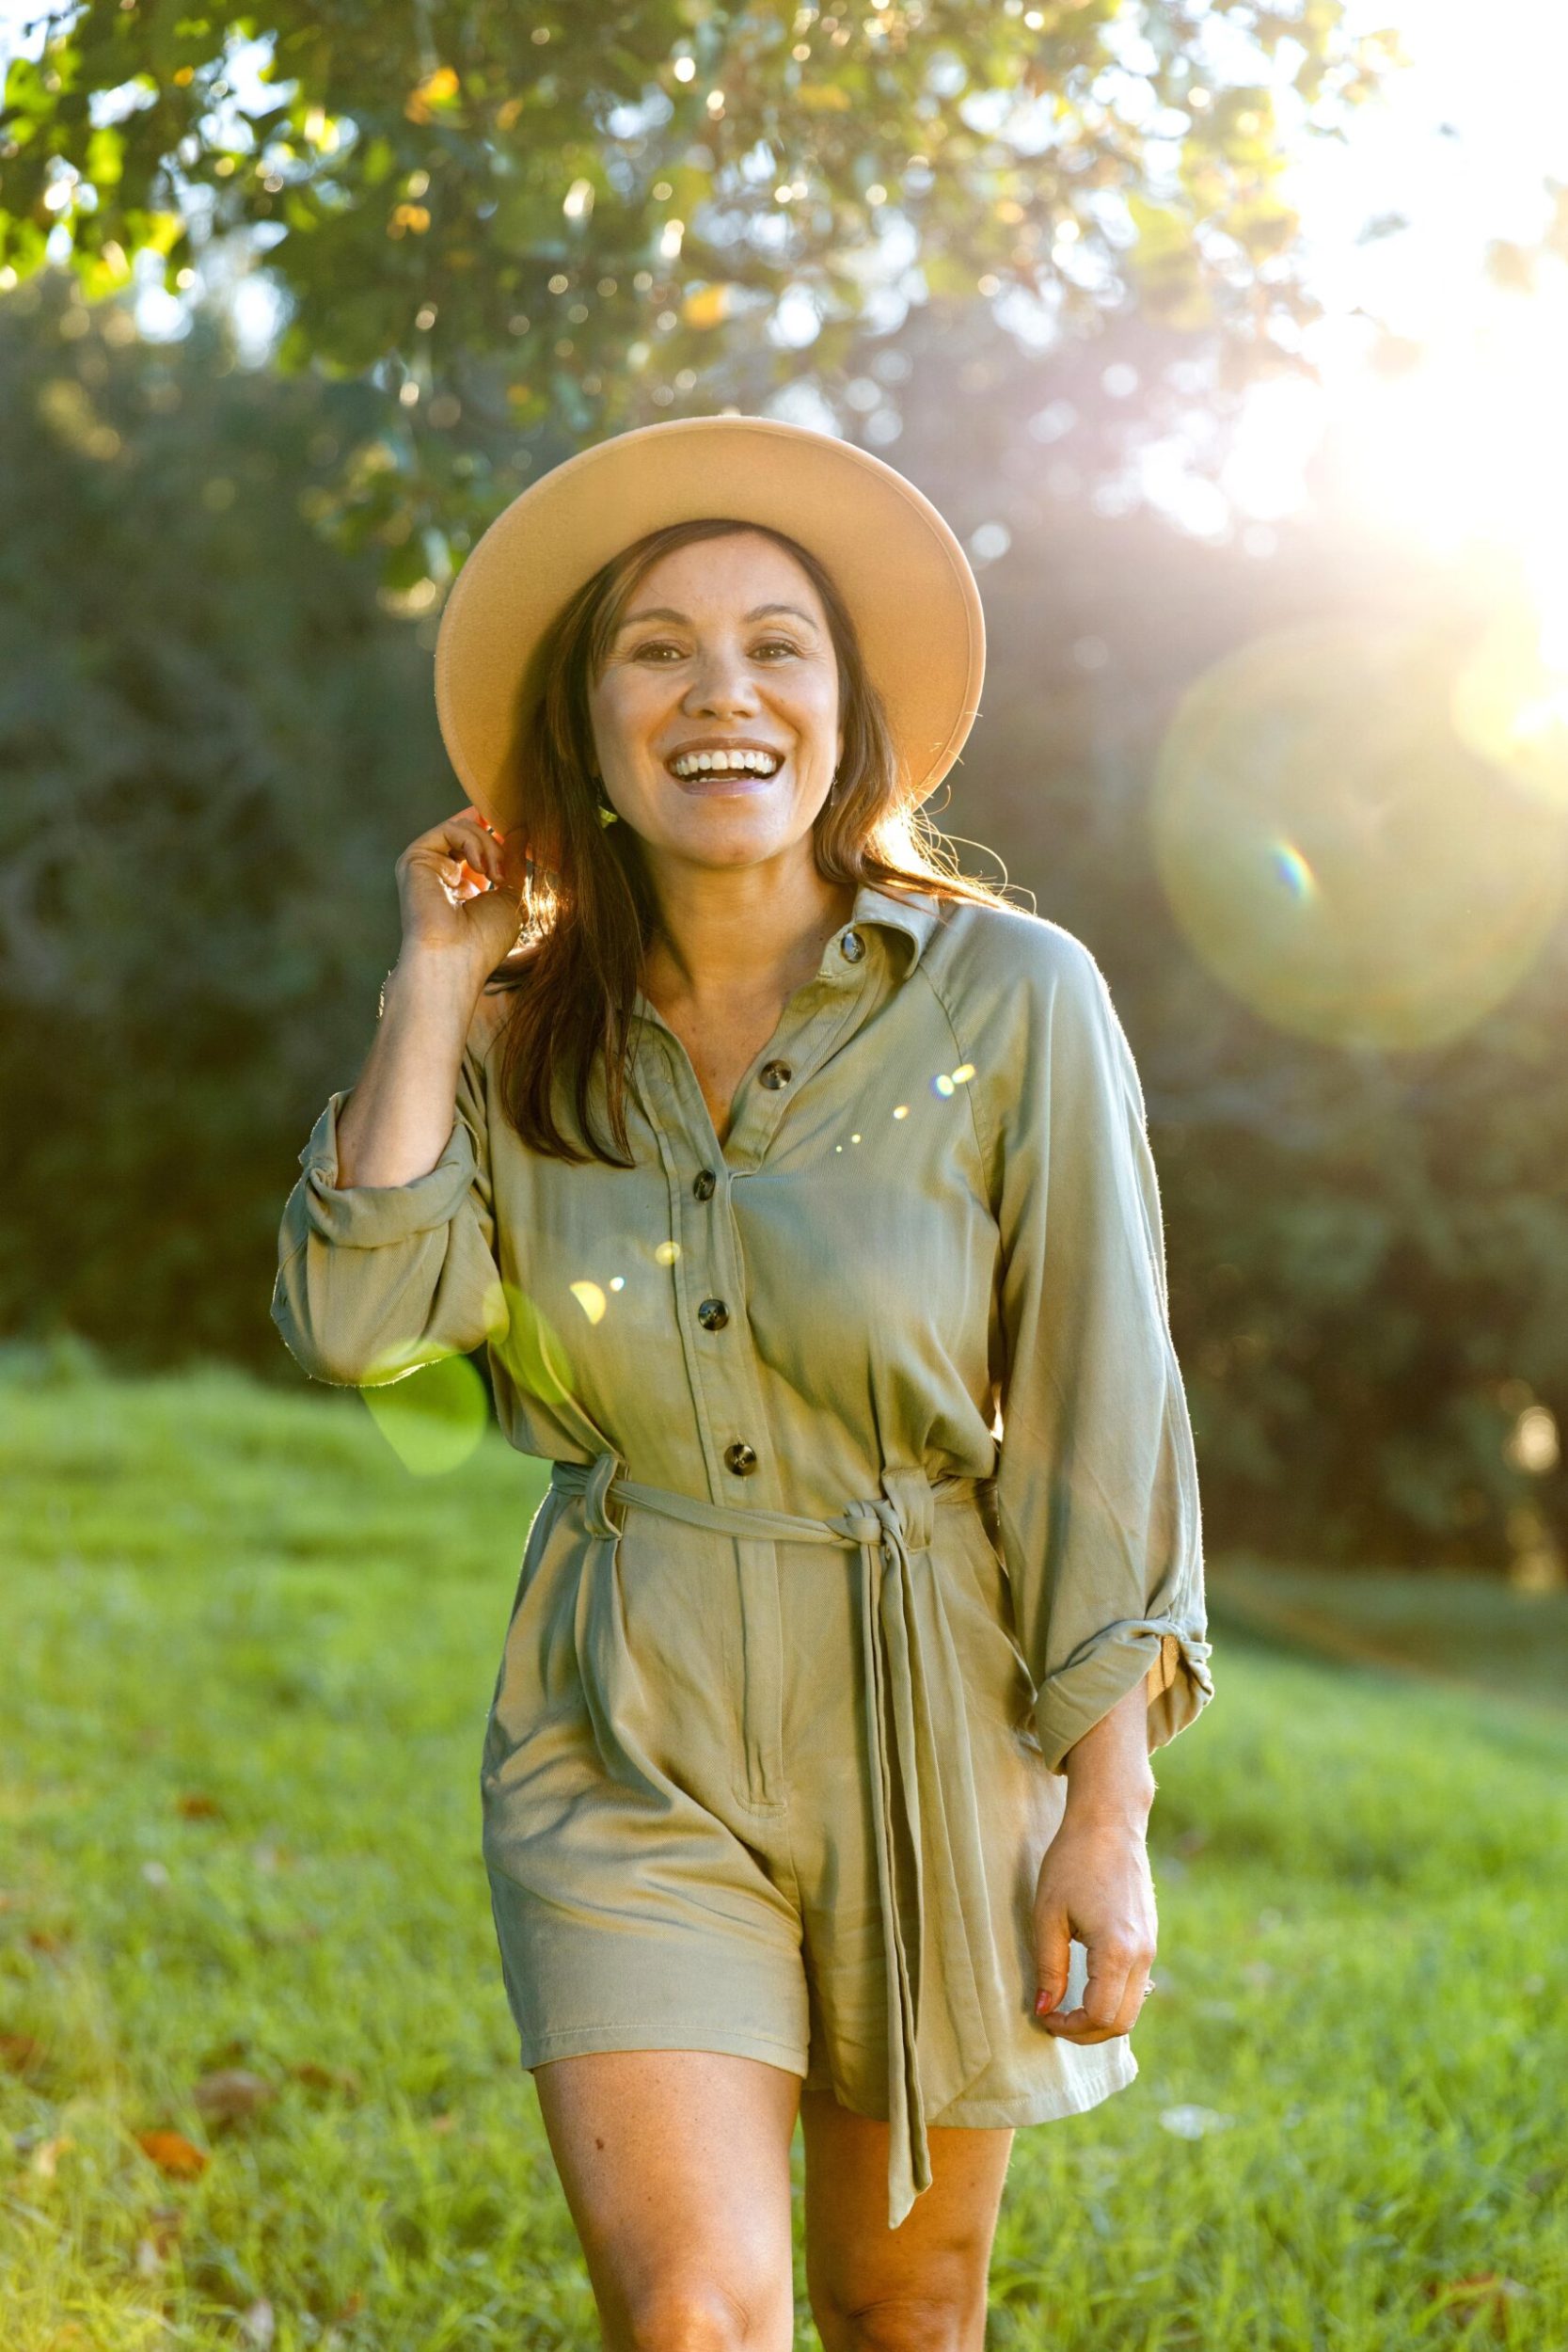 Stacey Morrison wearing a wide-brimmed hat posing in a field